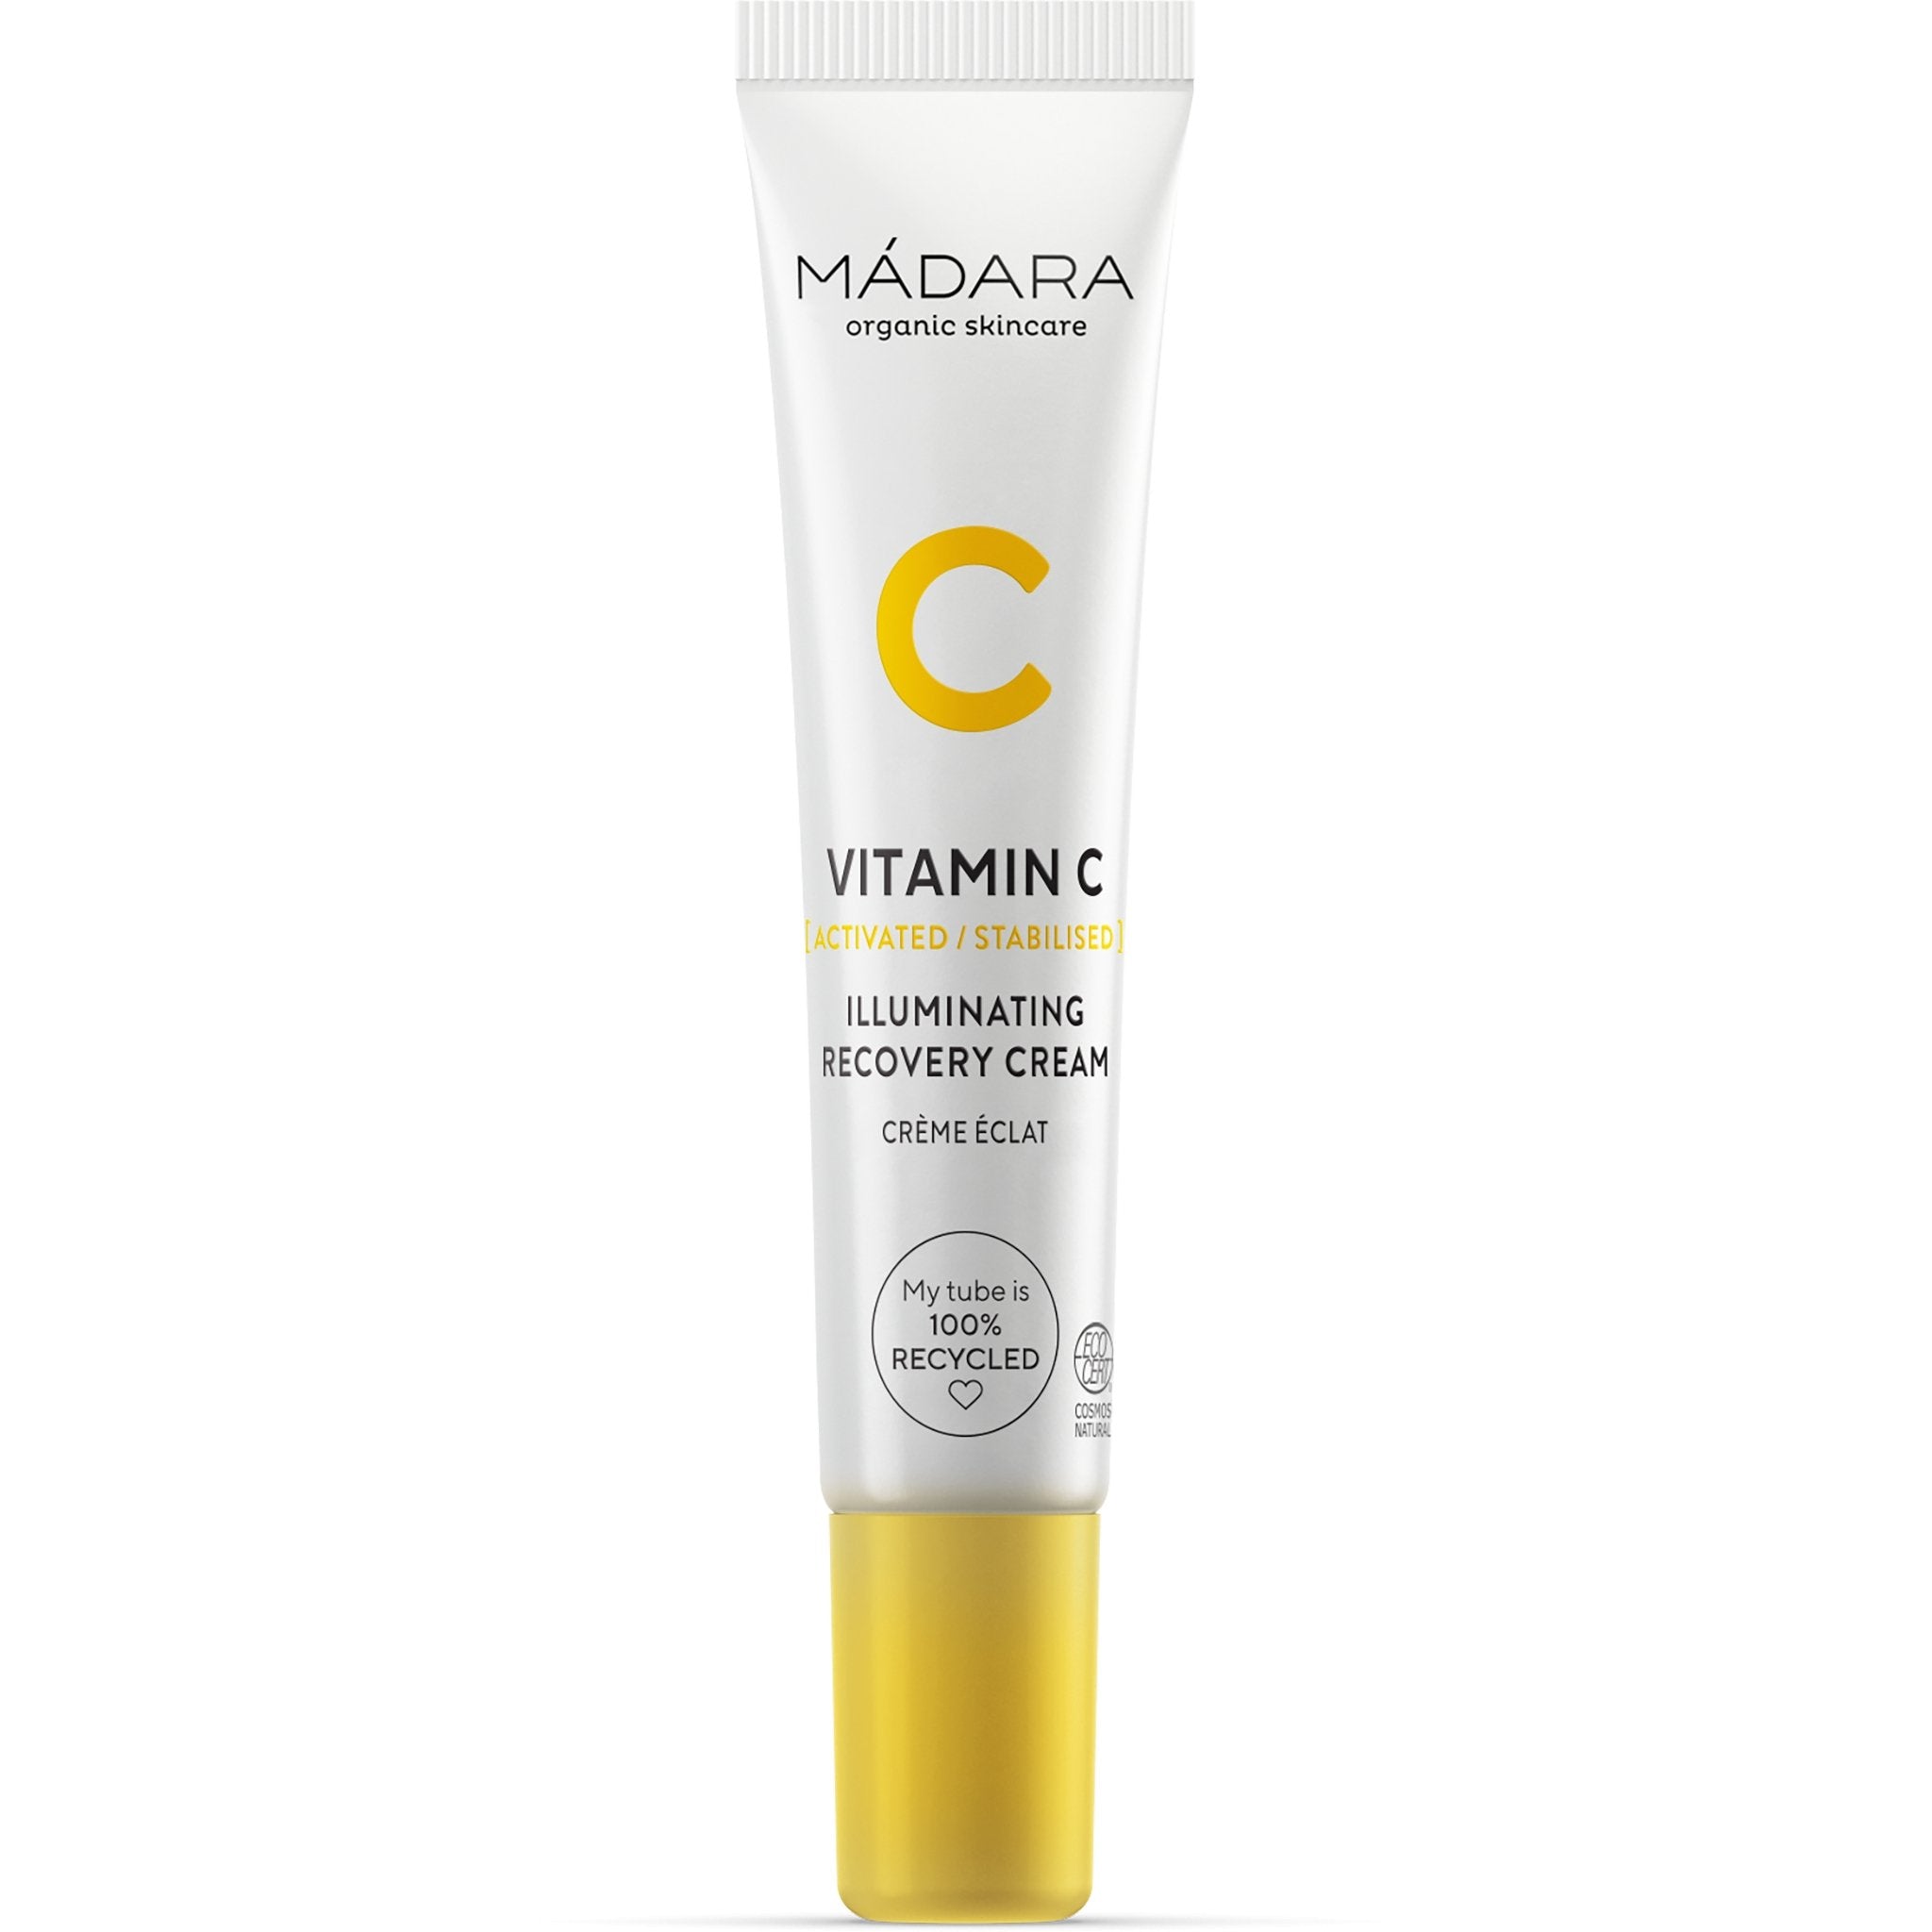 Vitamin C | Illuminating Recovery Cream - mypure.co.uk